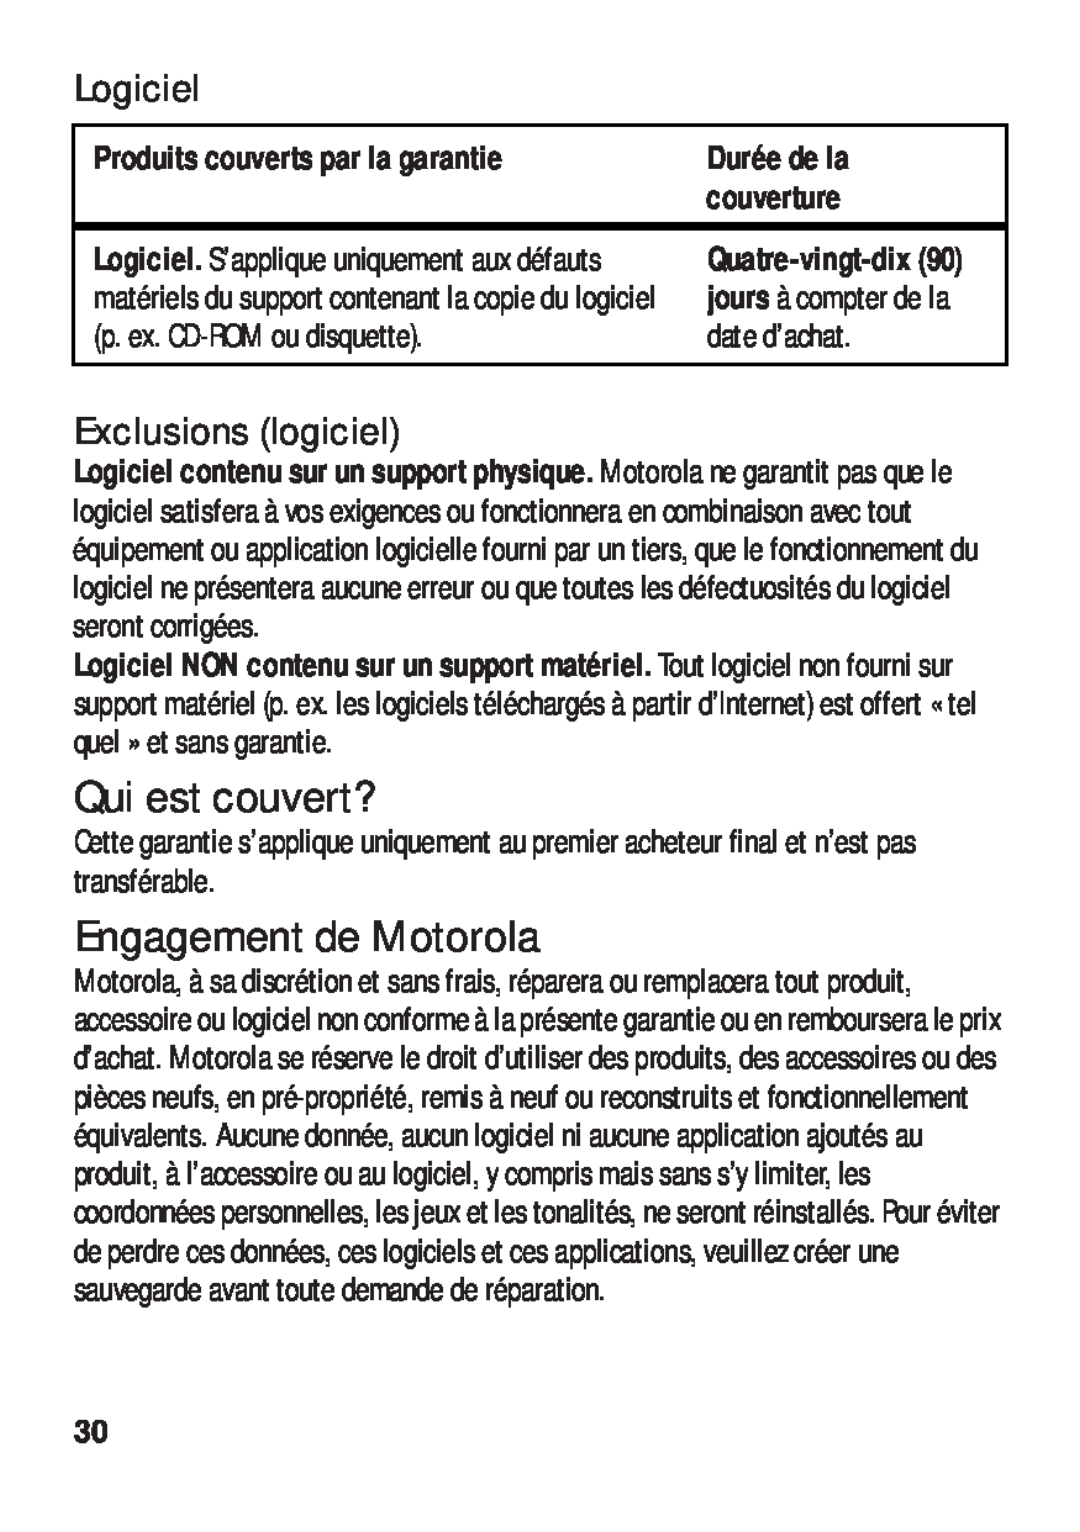 Motorola TX500 manual Qui est couvert?, Engagement de Motorola, Logiciel, Exclusions logiciel 